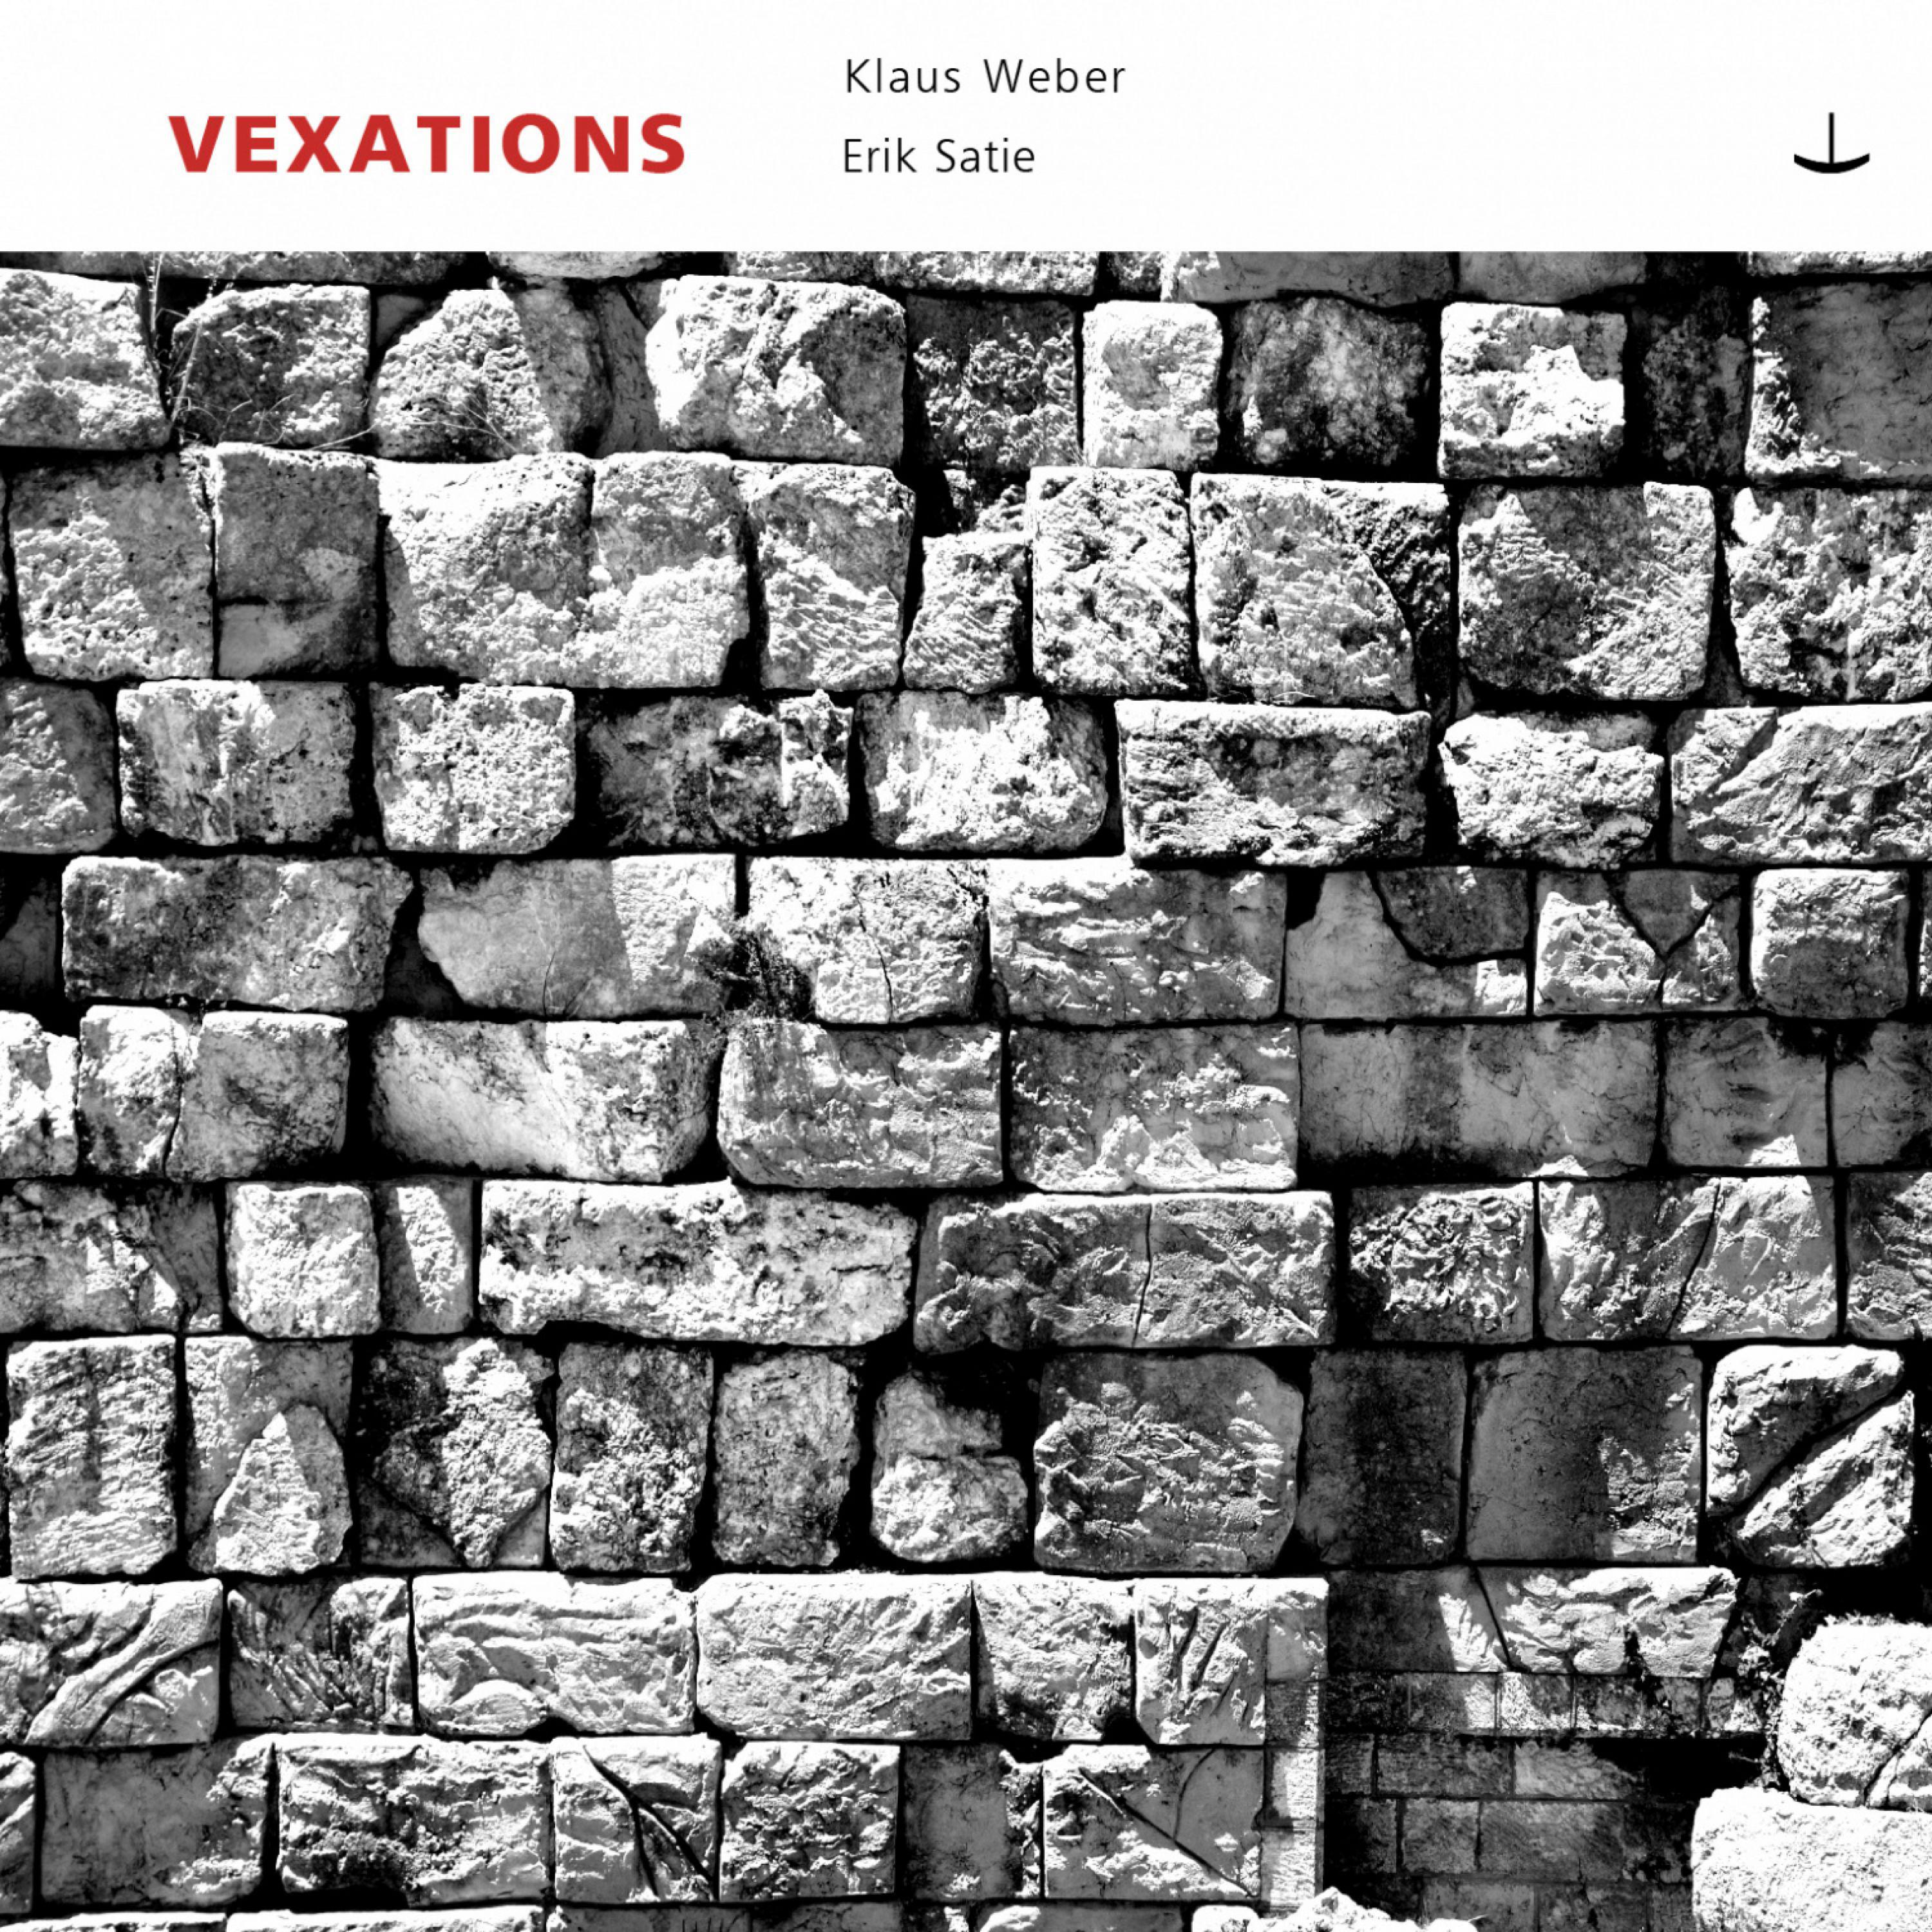 Klaus Weber - Vexations: Ende, Ankommen